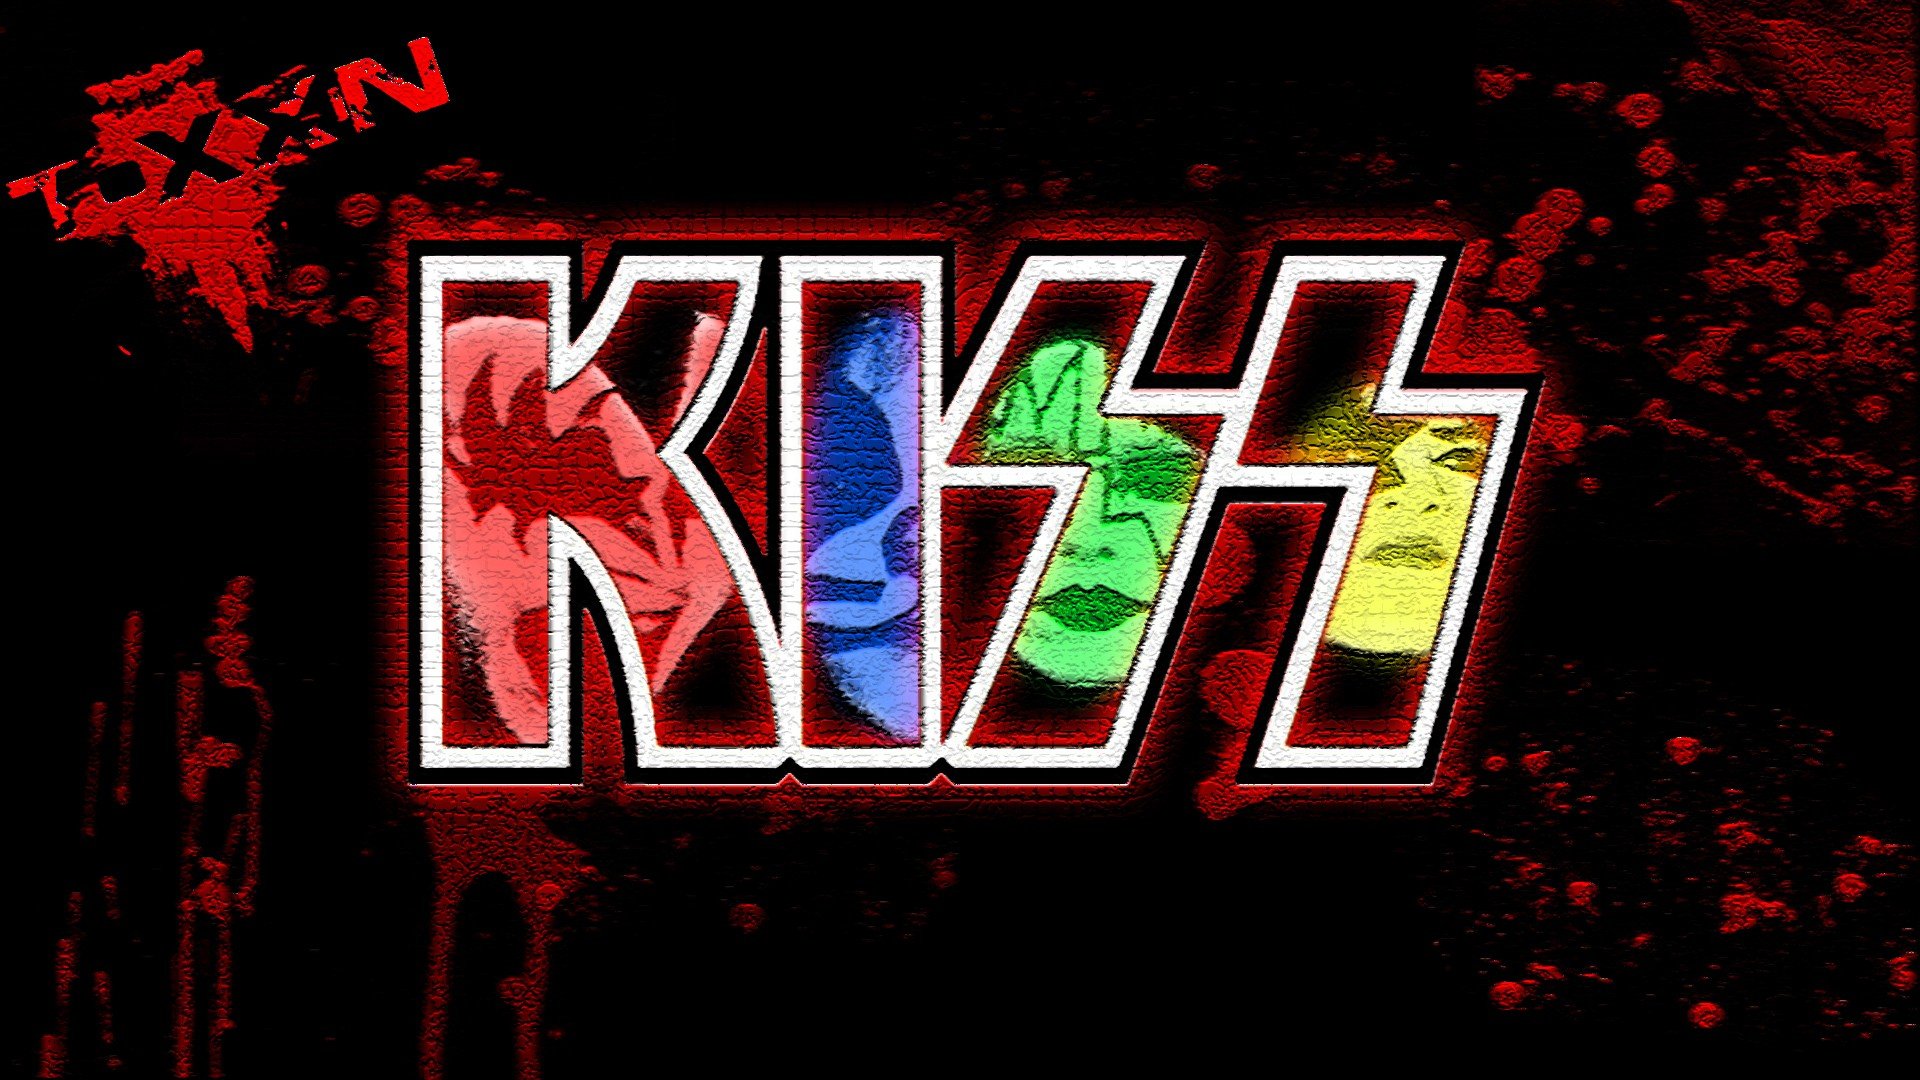 Digital Art Artwork Fan Rock Band Kiss Wallpaper Background